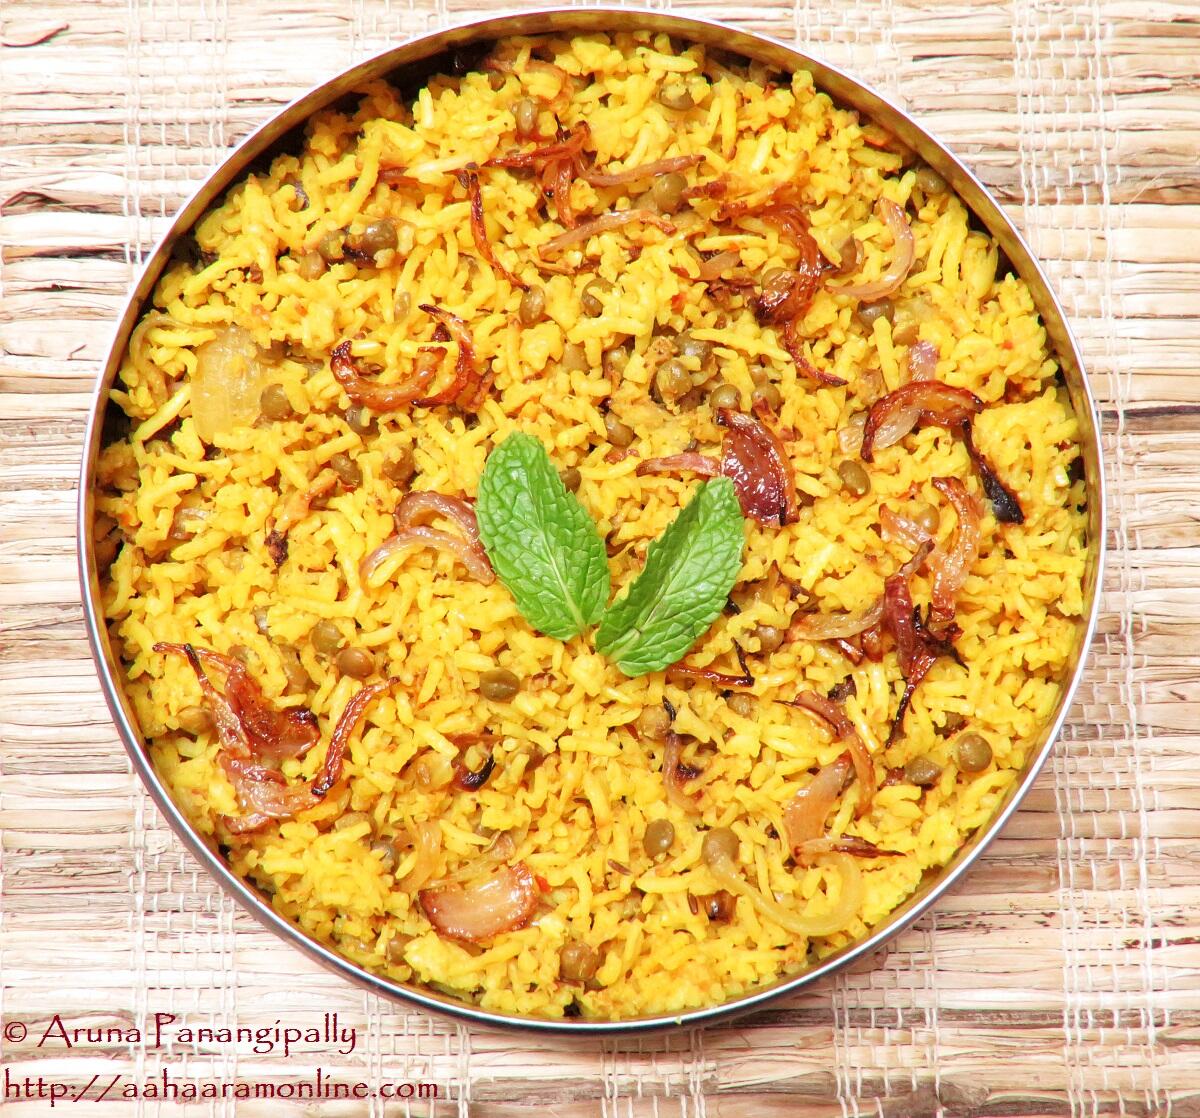 Recipe for Masoor Dal Biryani or Masur Dal Biryani